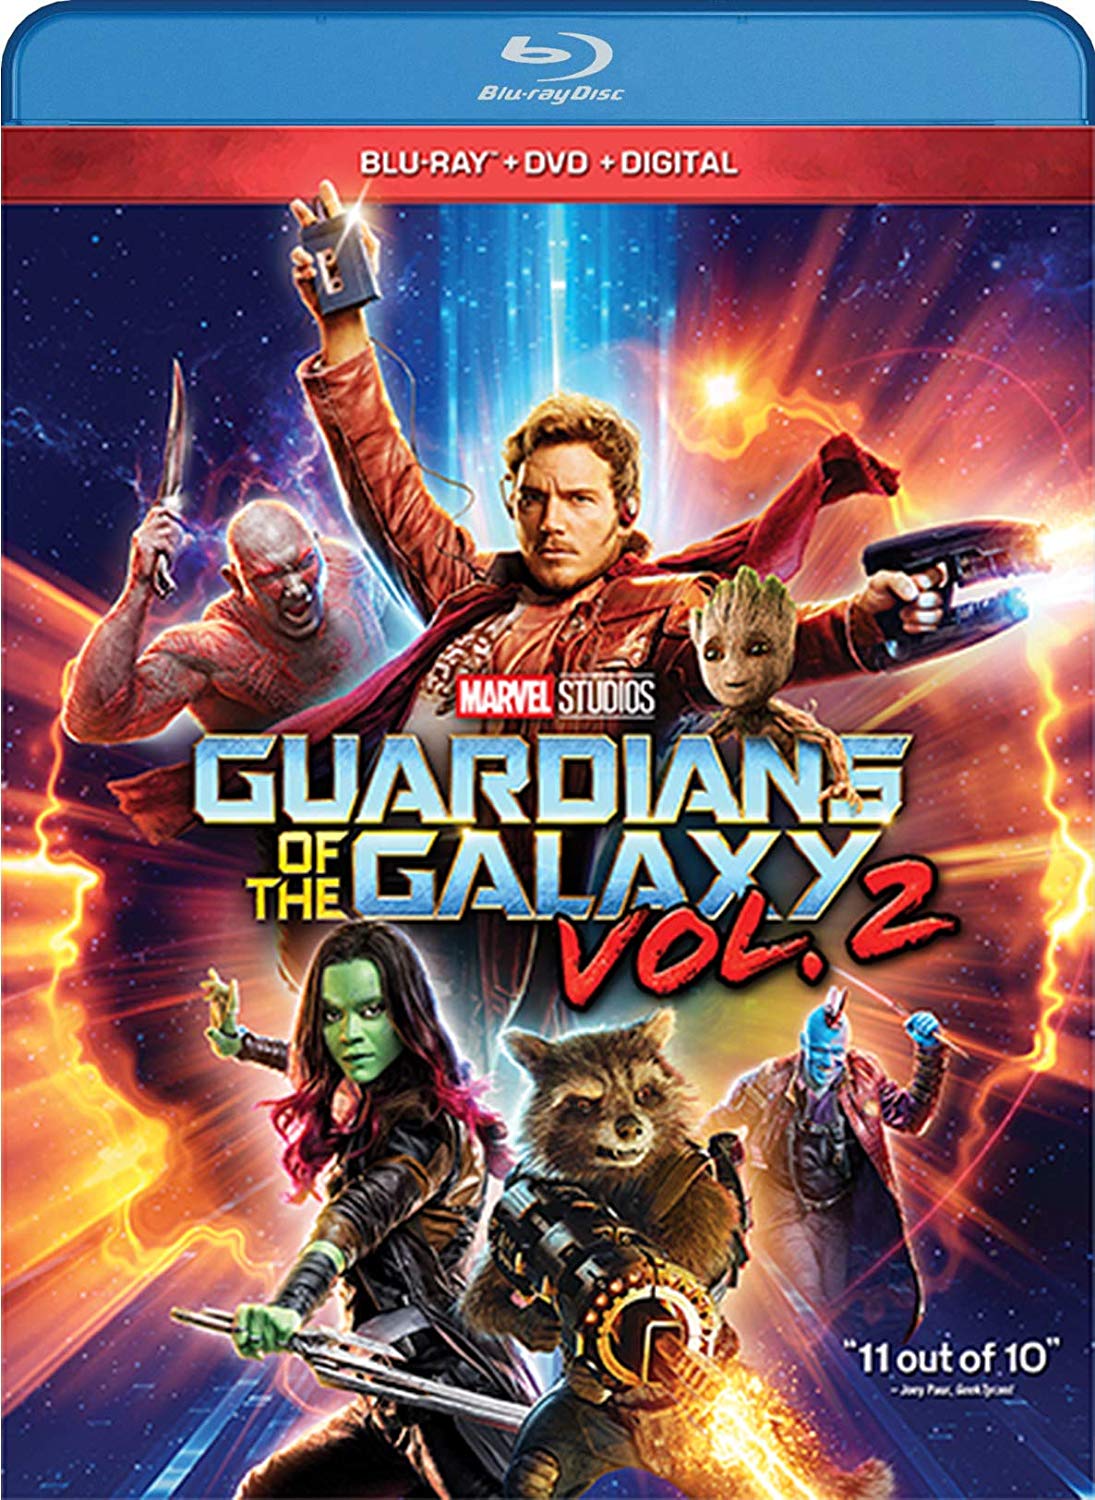 Guardians of the Galaxy Vol. 2 - Blu-Ray DVD